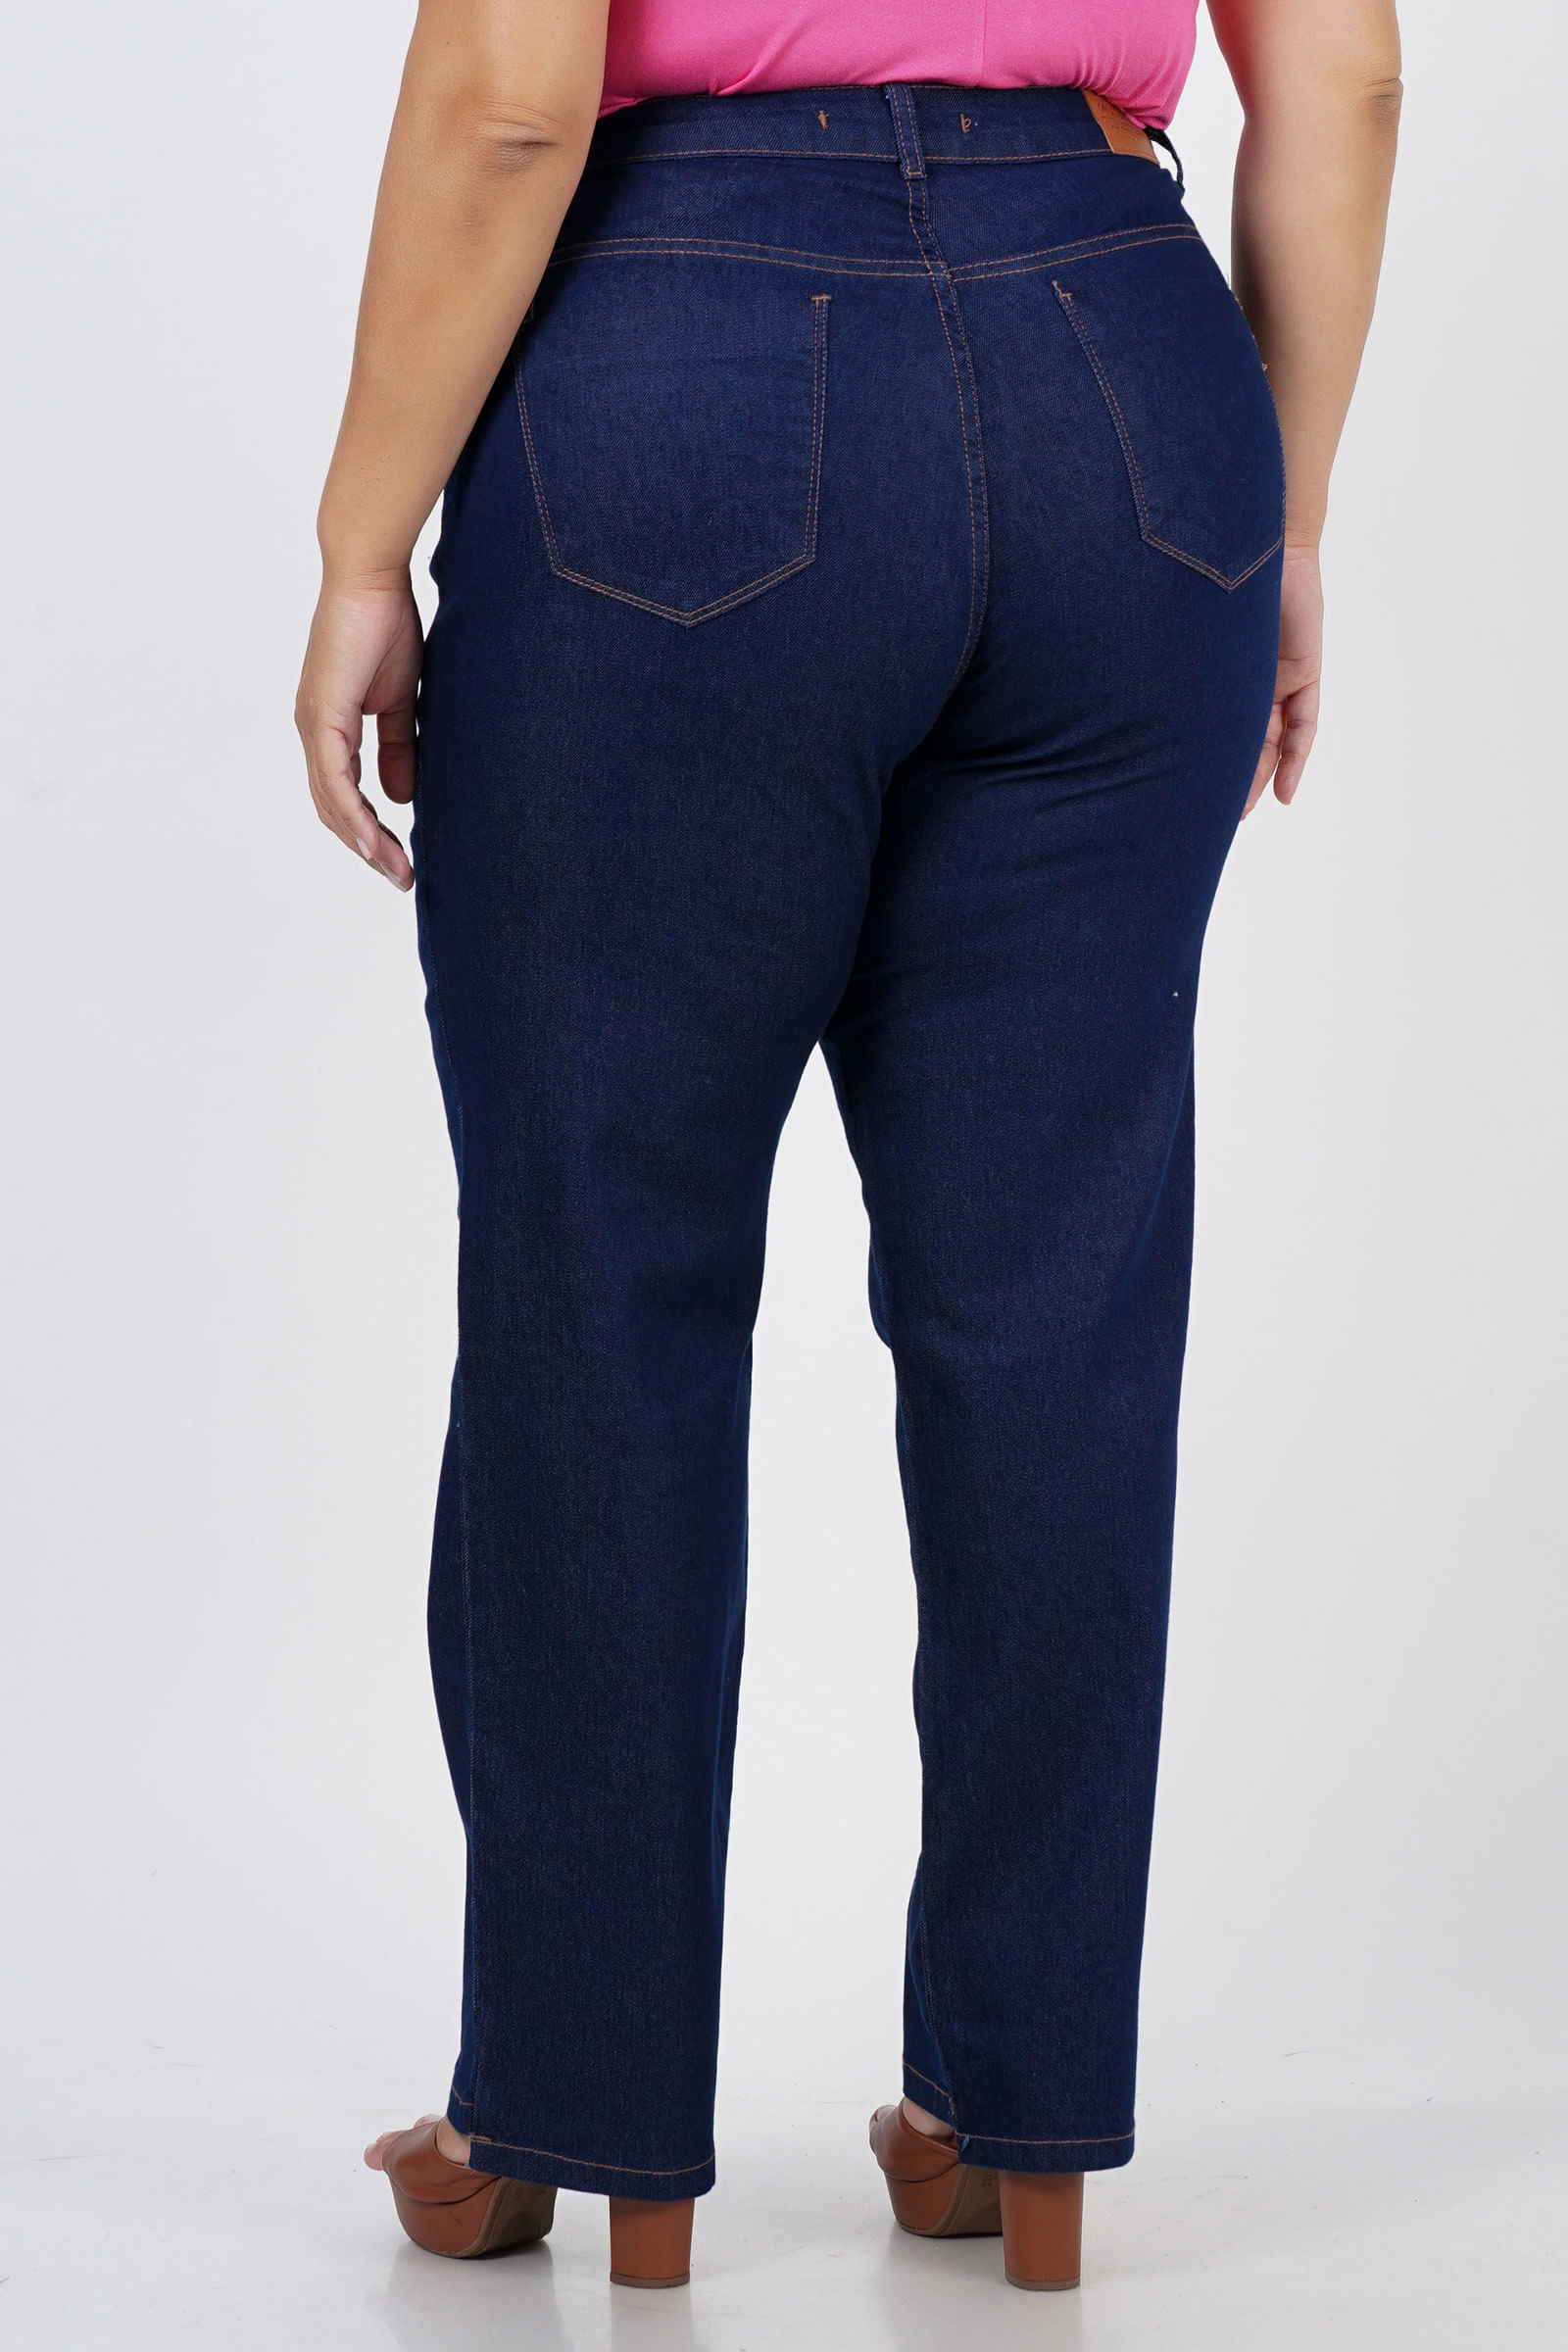 Calca-reta-jeans-cos-transpassado-plus-size_0102_2